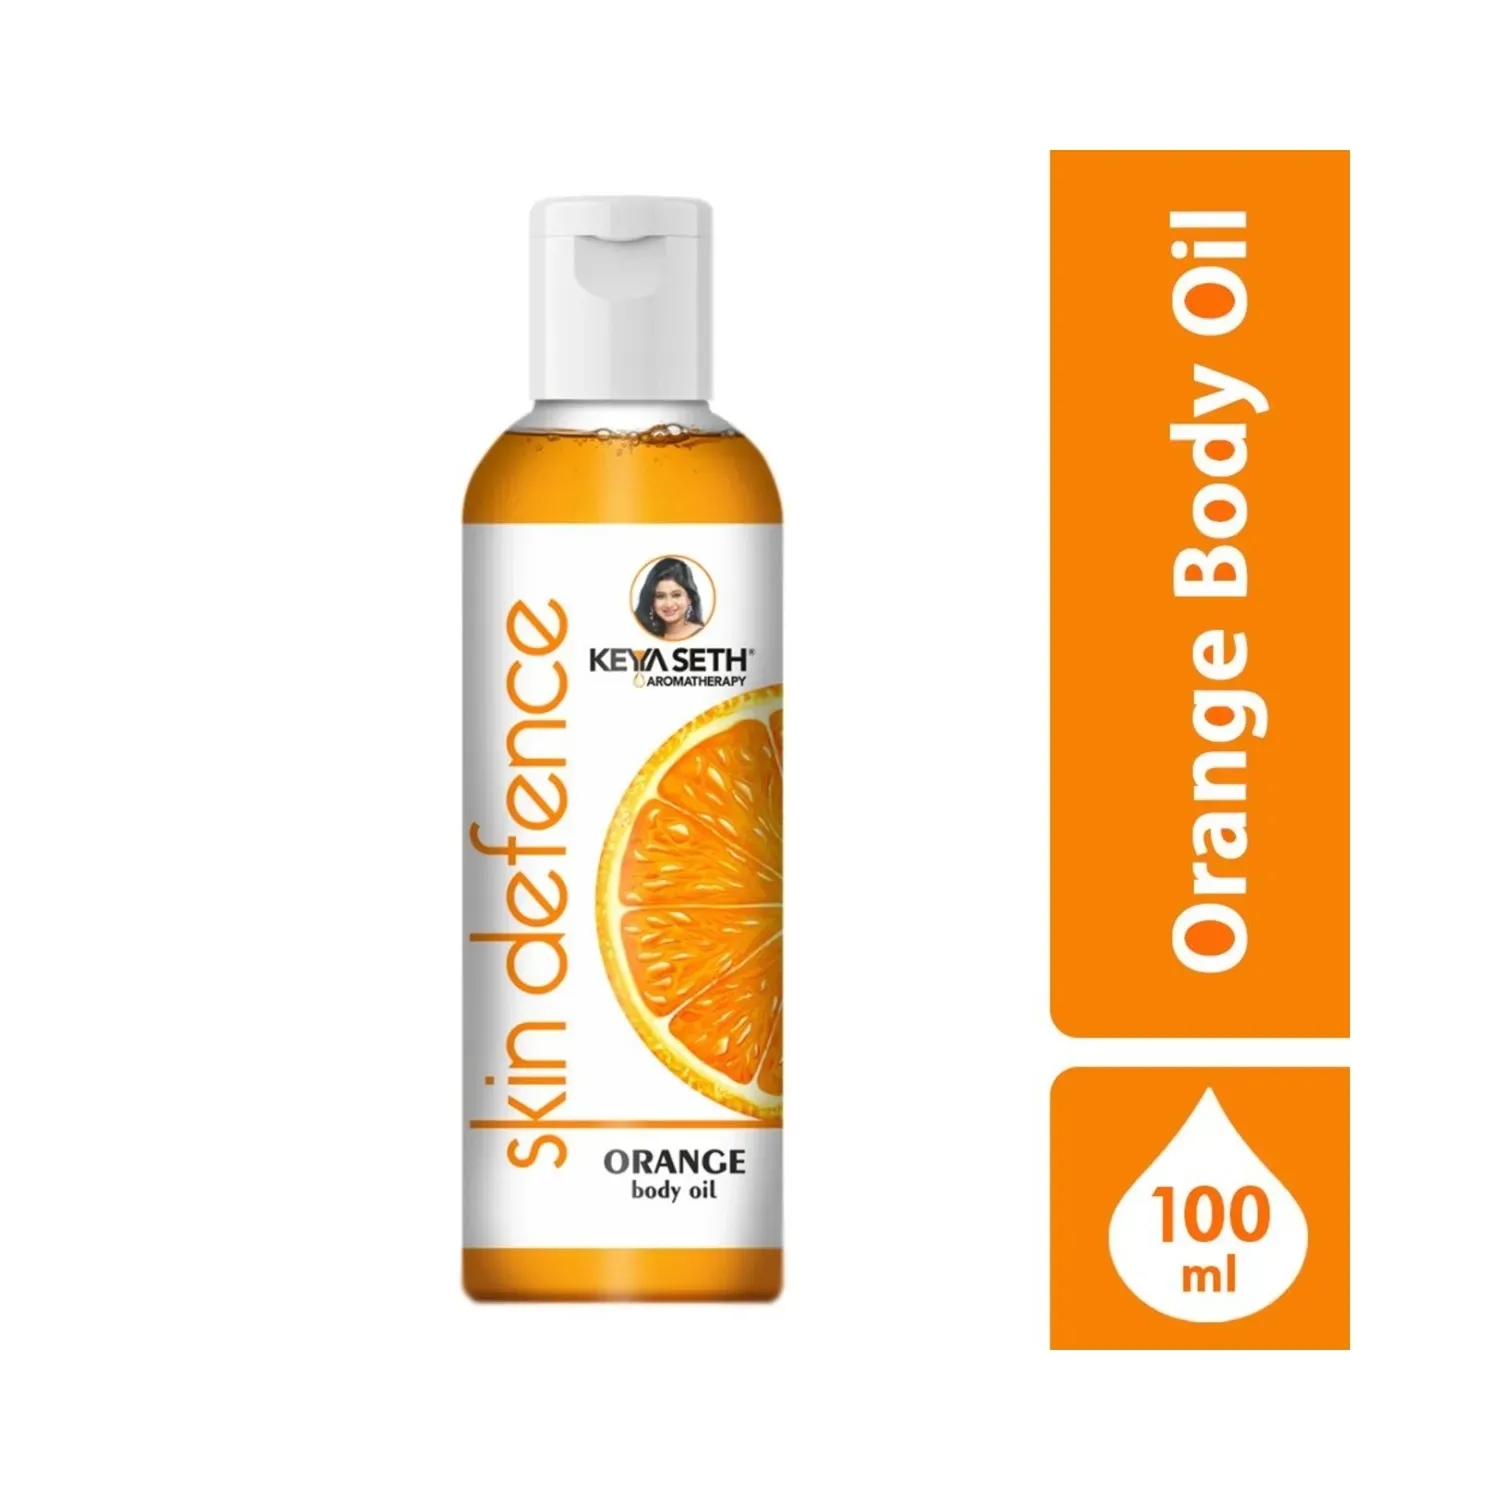 Keya Seth Aromatherapy | Keya Seth Aromatherapy Skin Defence Orange Body Oil (100ml)